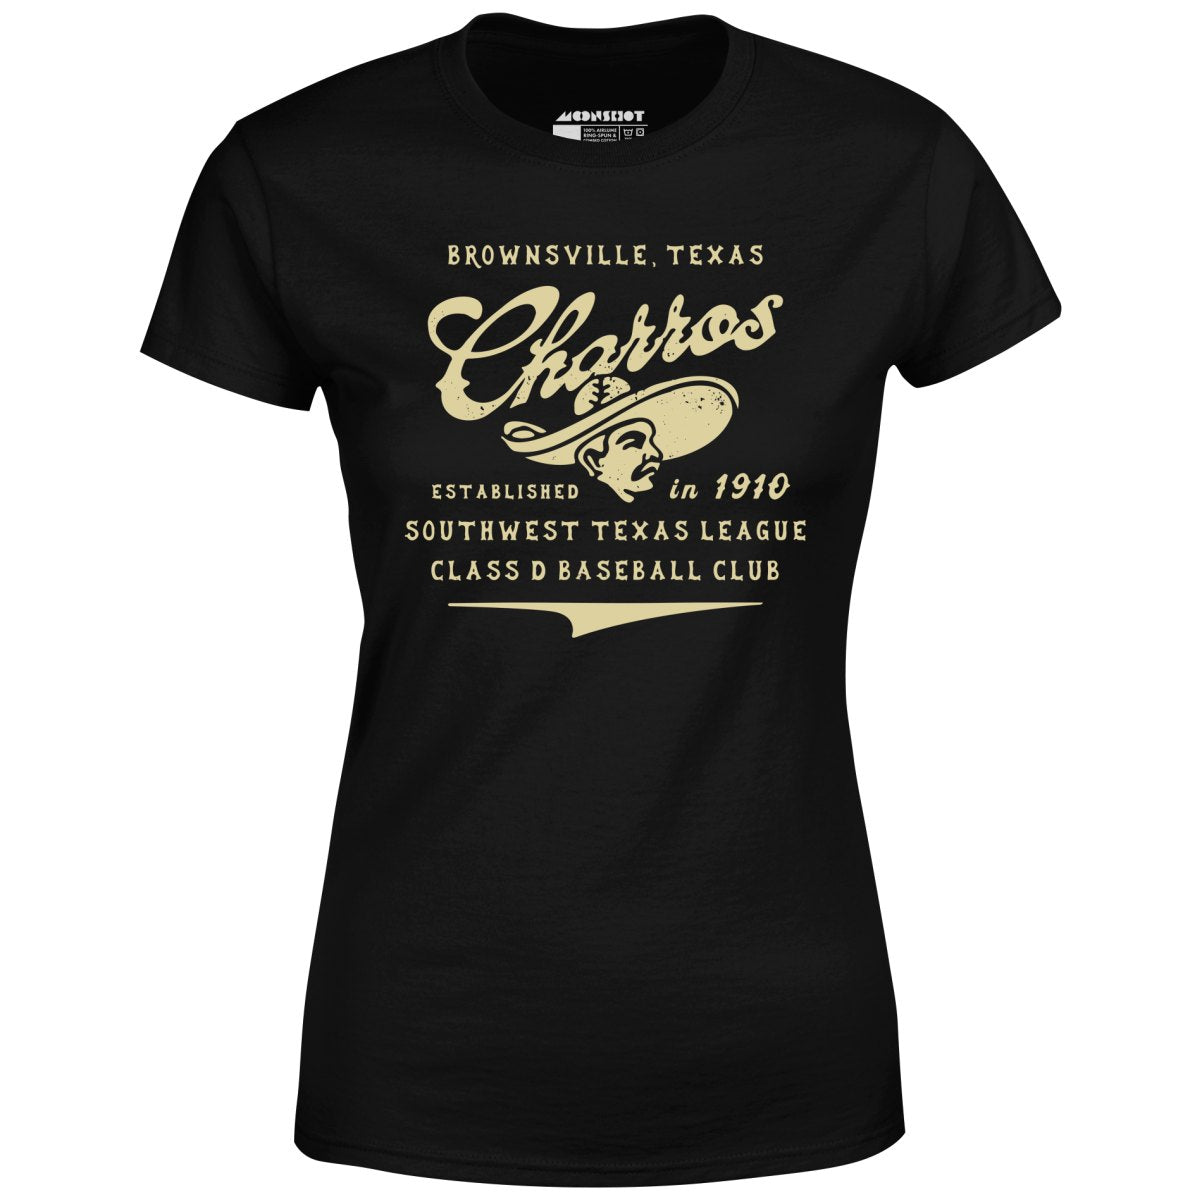 Brownsville Charros - Texas - Vintage Defunct Baseball Teams - Women's T-Shirt